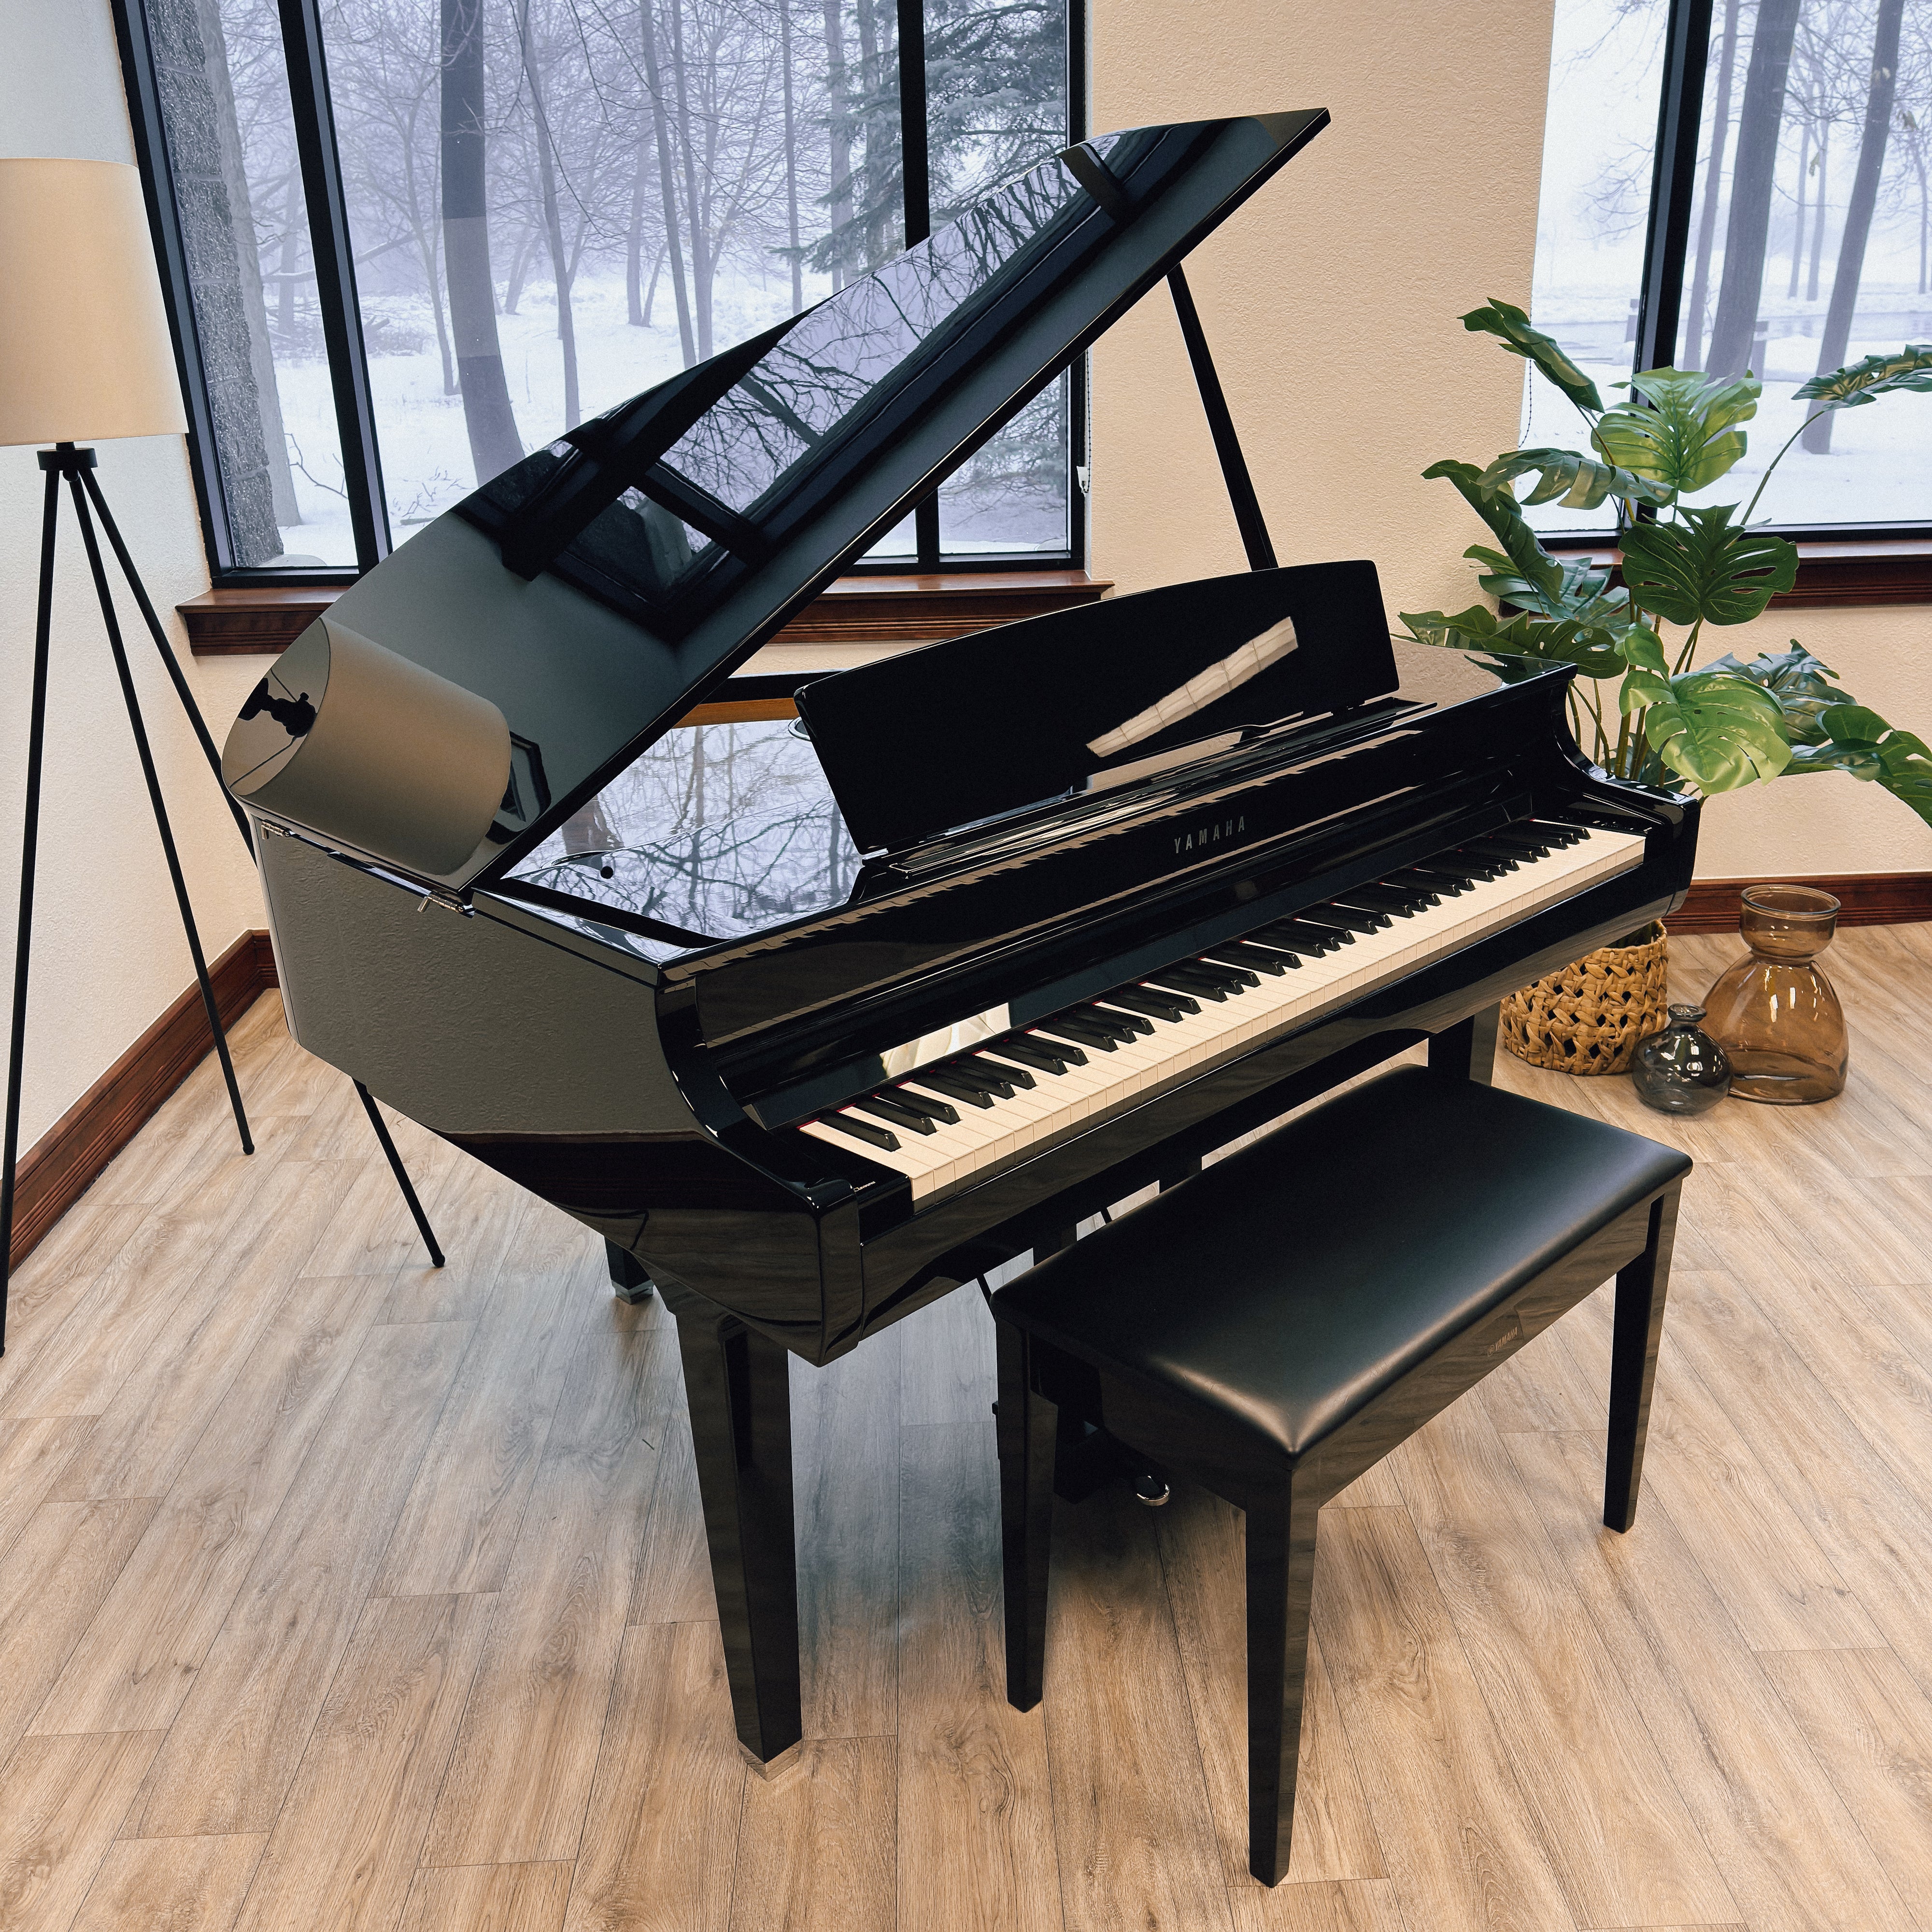 Yamaha Clavinova CSP-295GP Digital Grand Piano - Polished Ebony - in a stylish music room